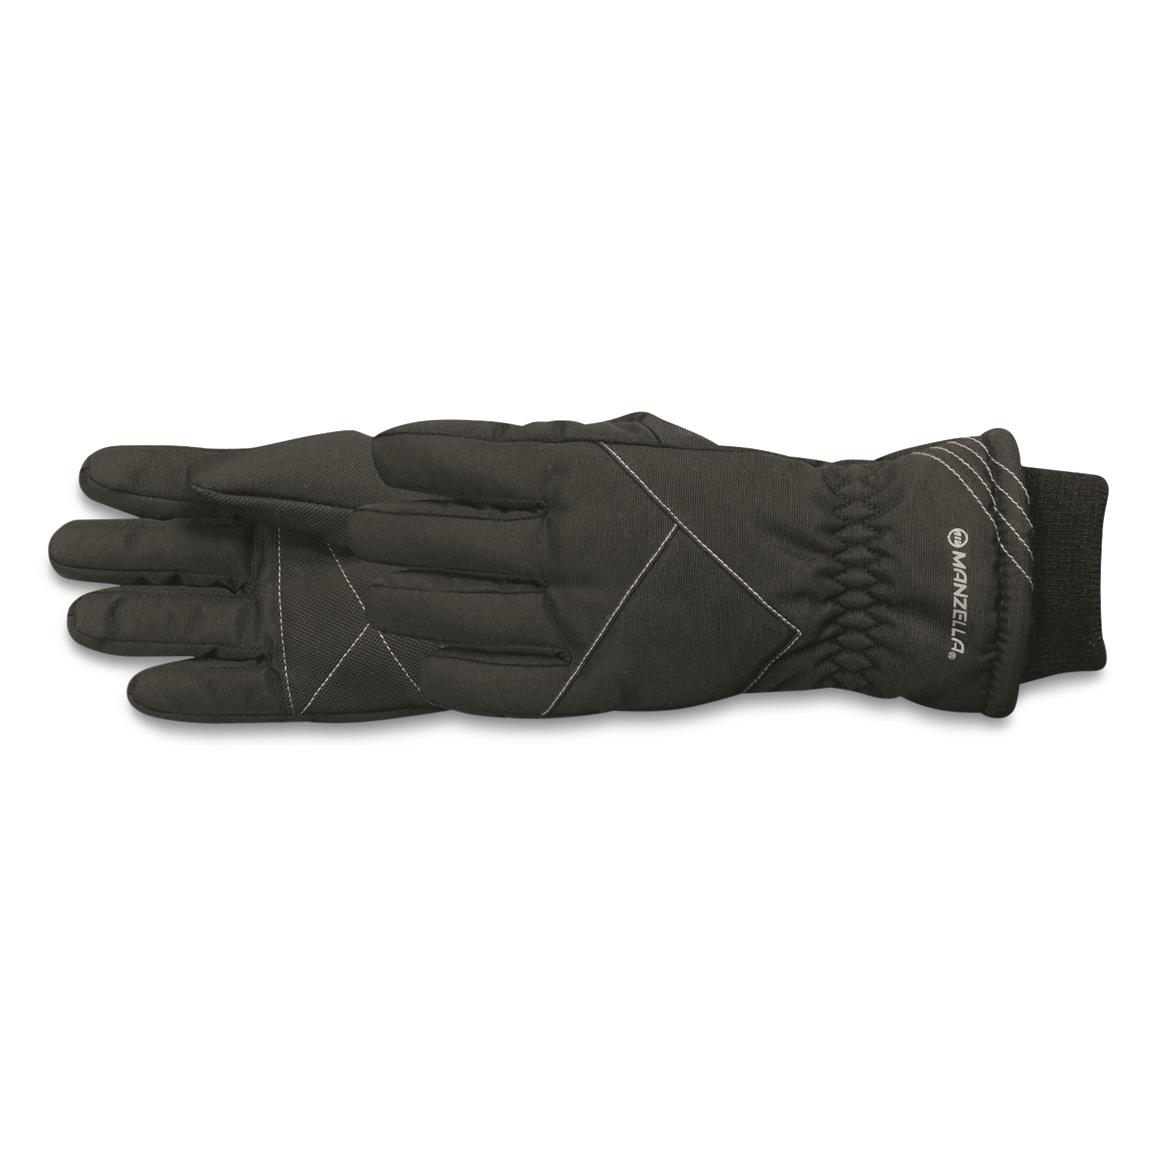 Manzella Youth Drift Gloves, Gray